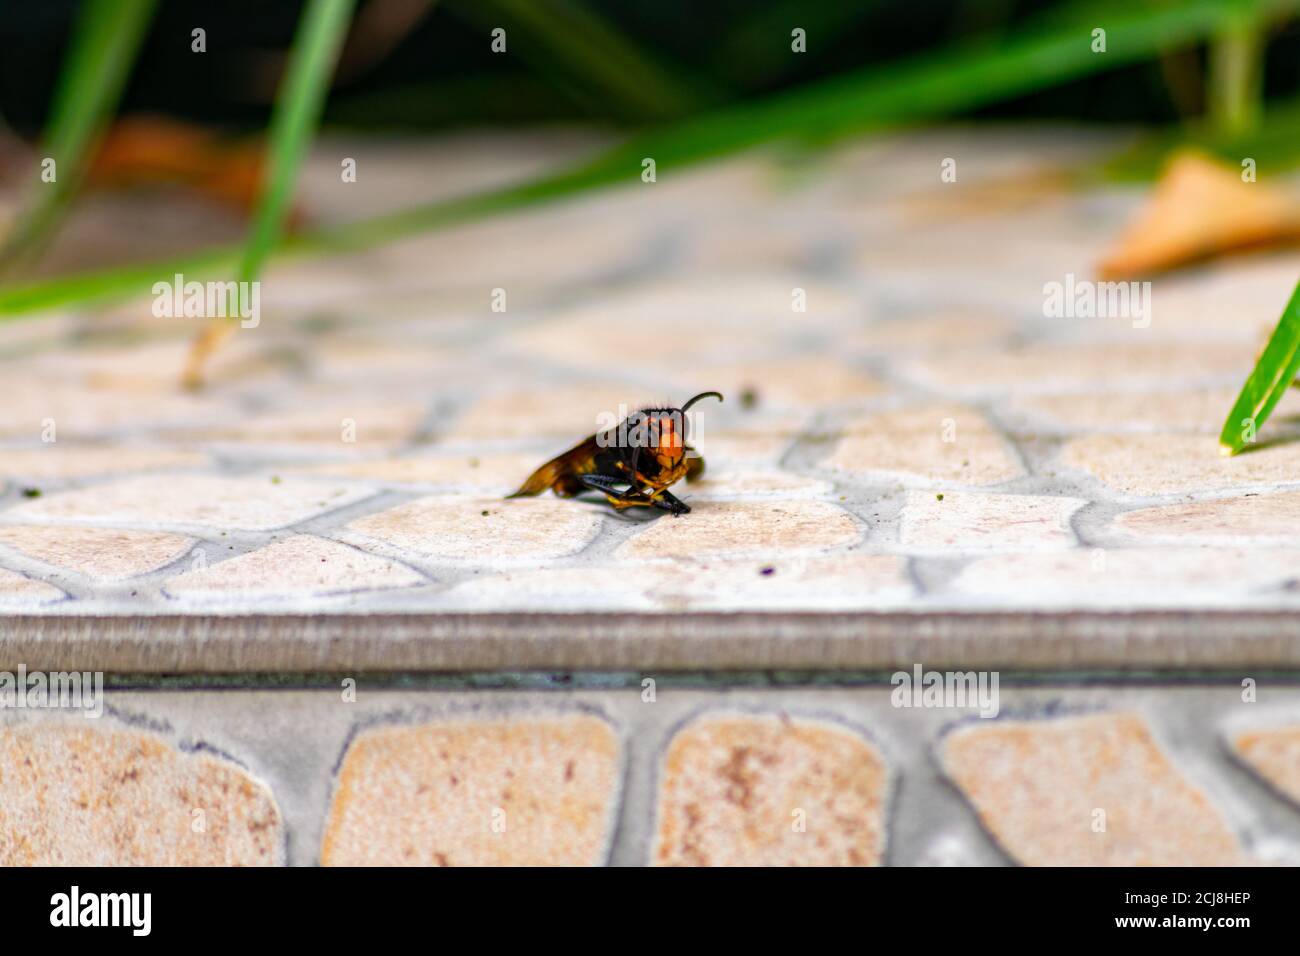 Dead asian hornet found in Braga, Portugal Stock Photo